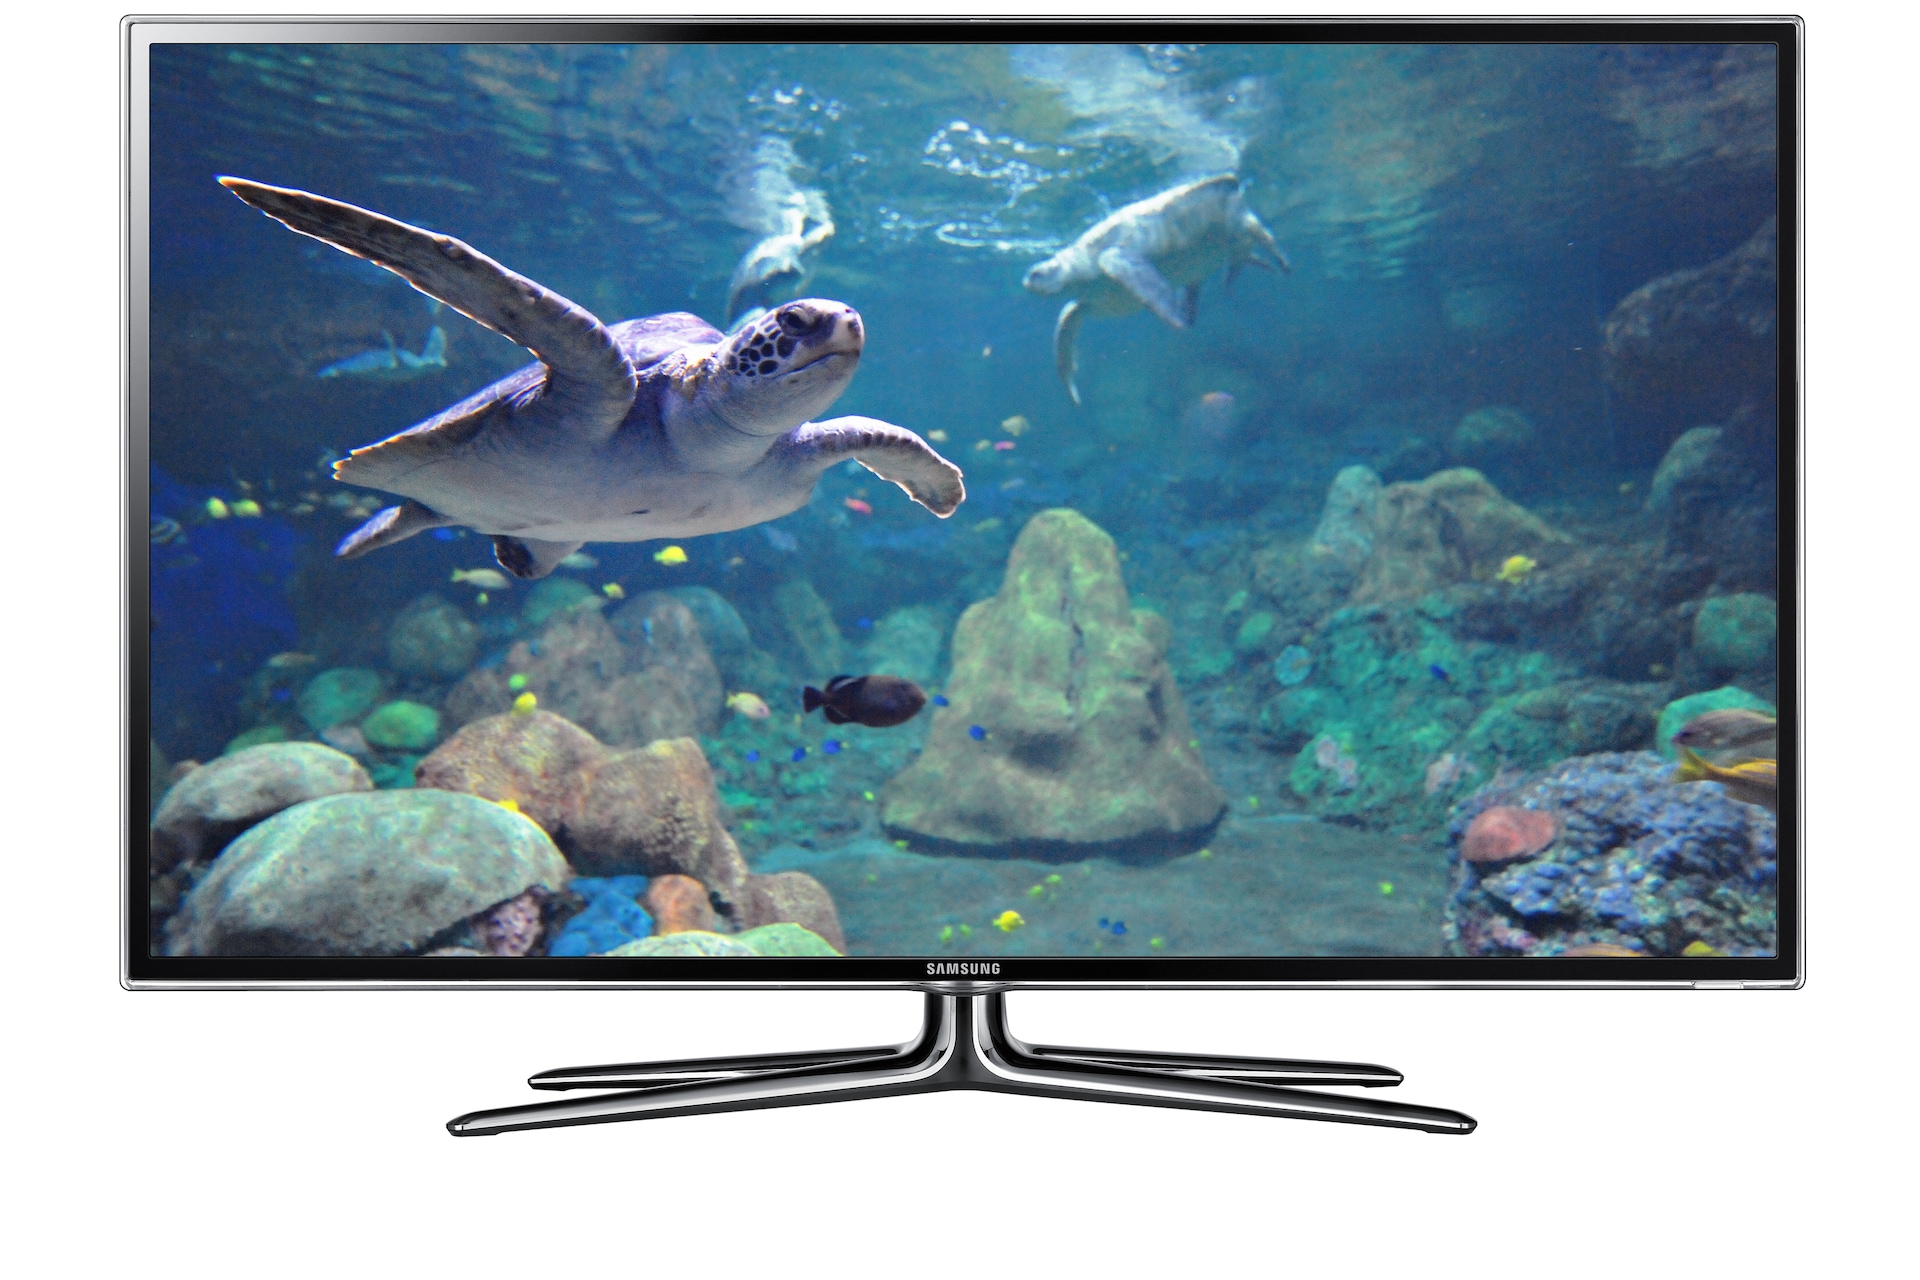 LED TV SAMSUNG 46'' 3D UE46F8000 SMART TV WIFI FULL HD TDT HD DUAL